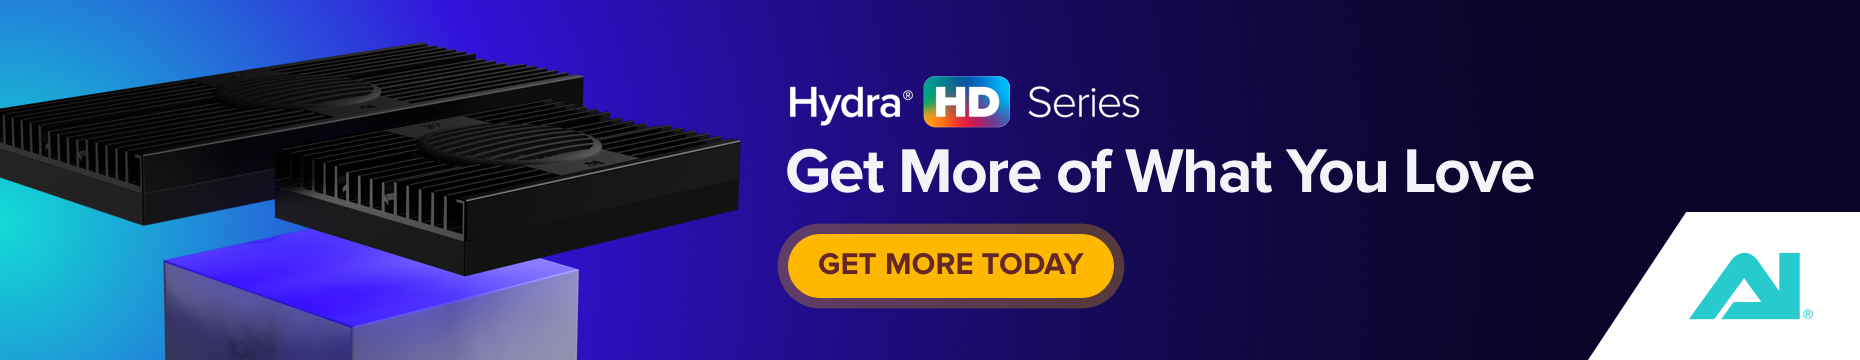 Hydra HD 2019 – Top banner (930 x 180)@2x